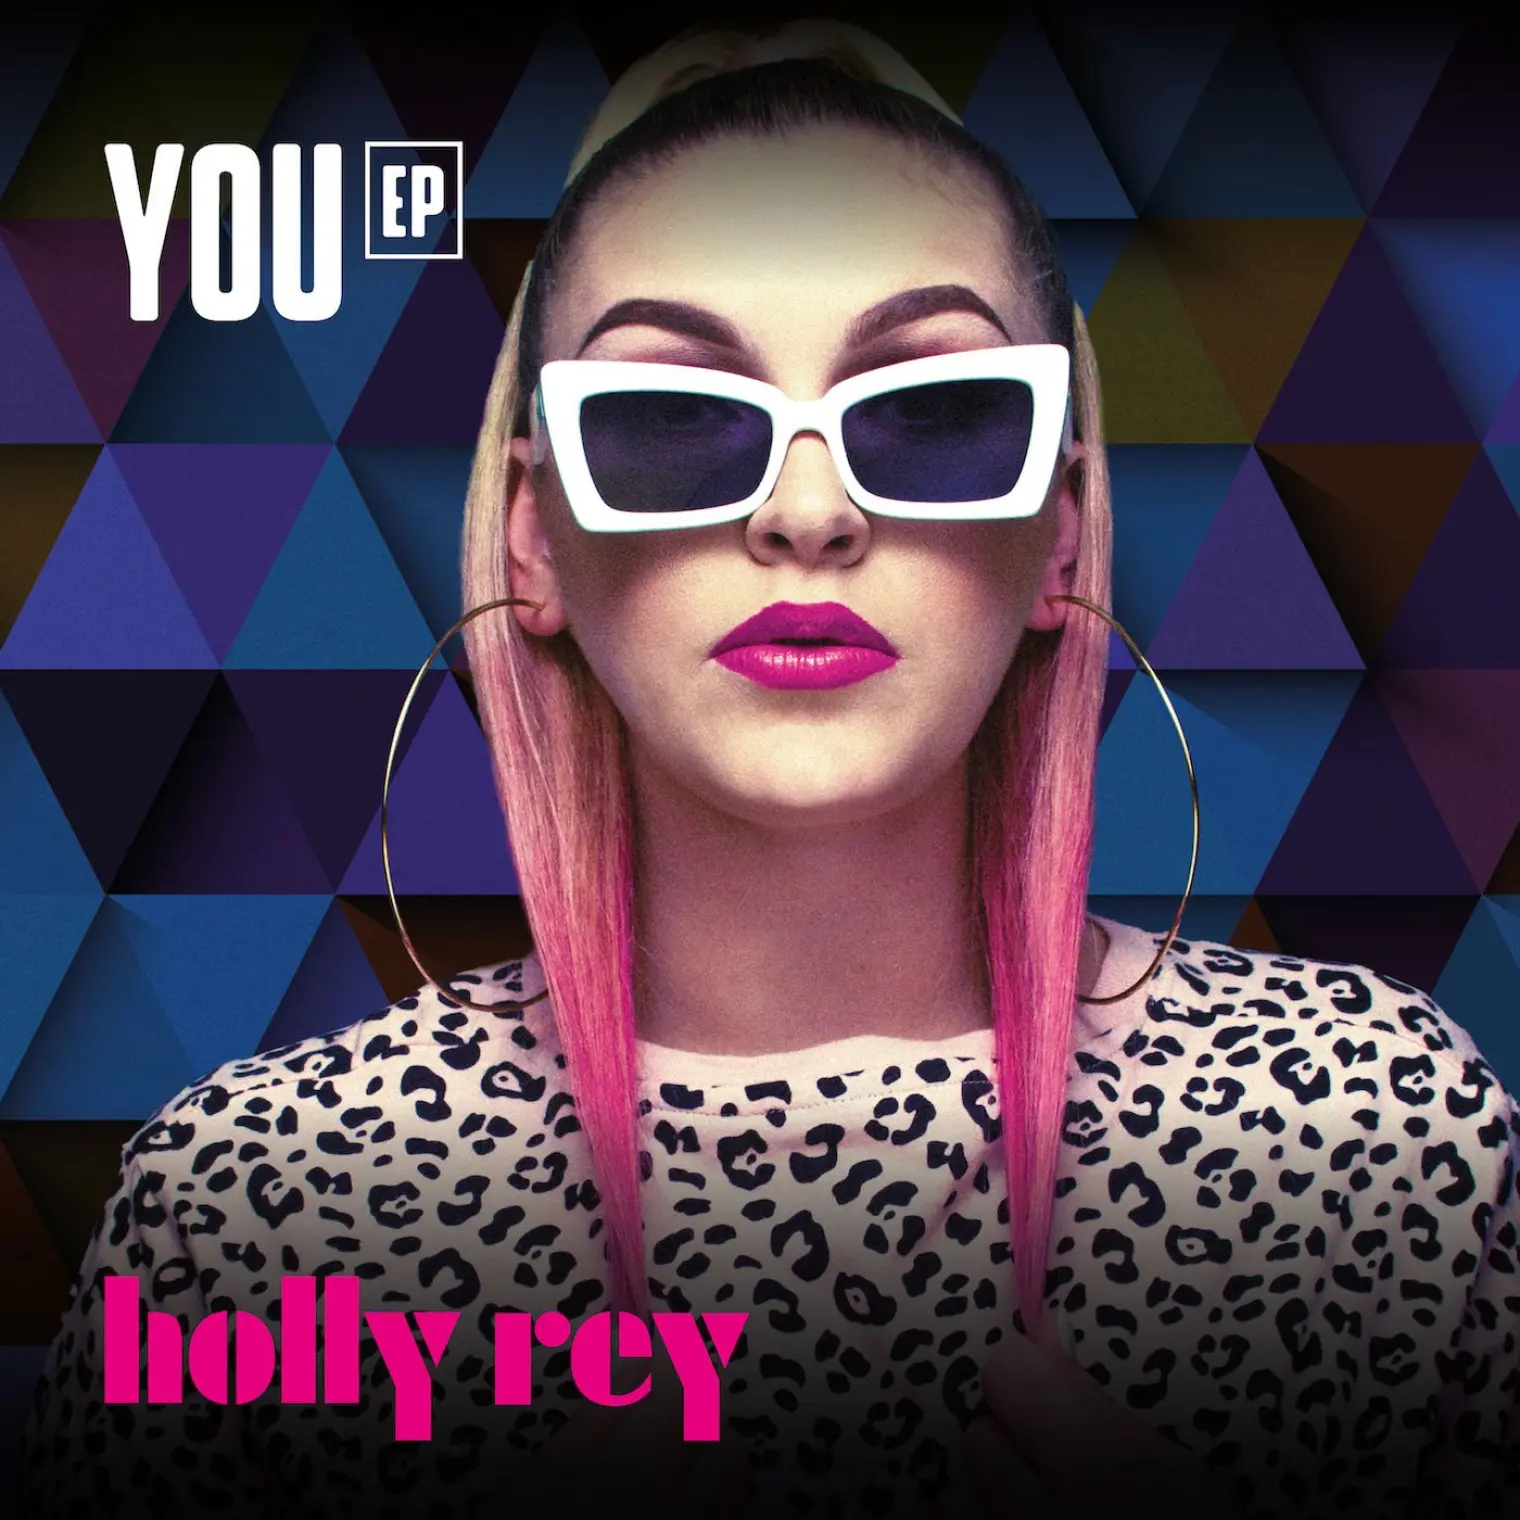 You EP -  Holly Rey 